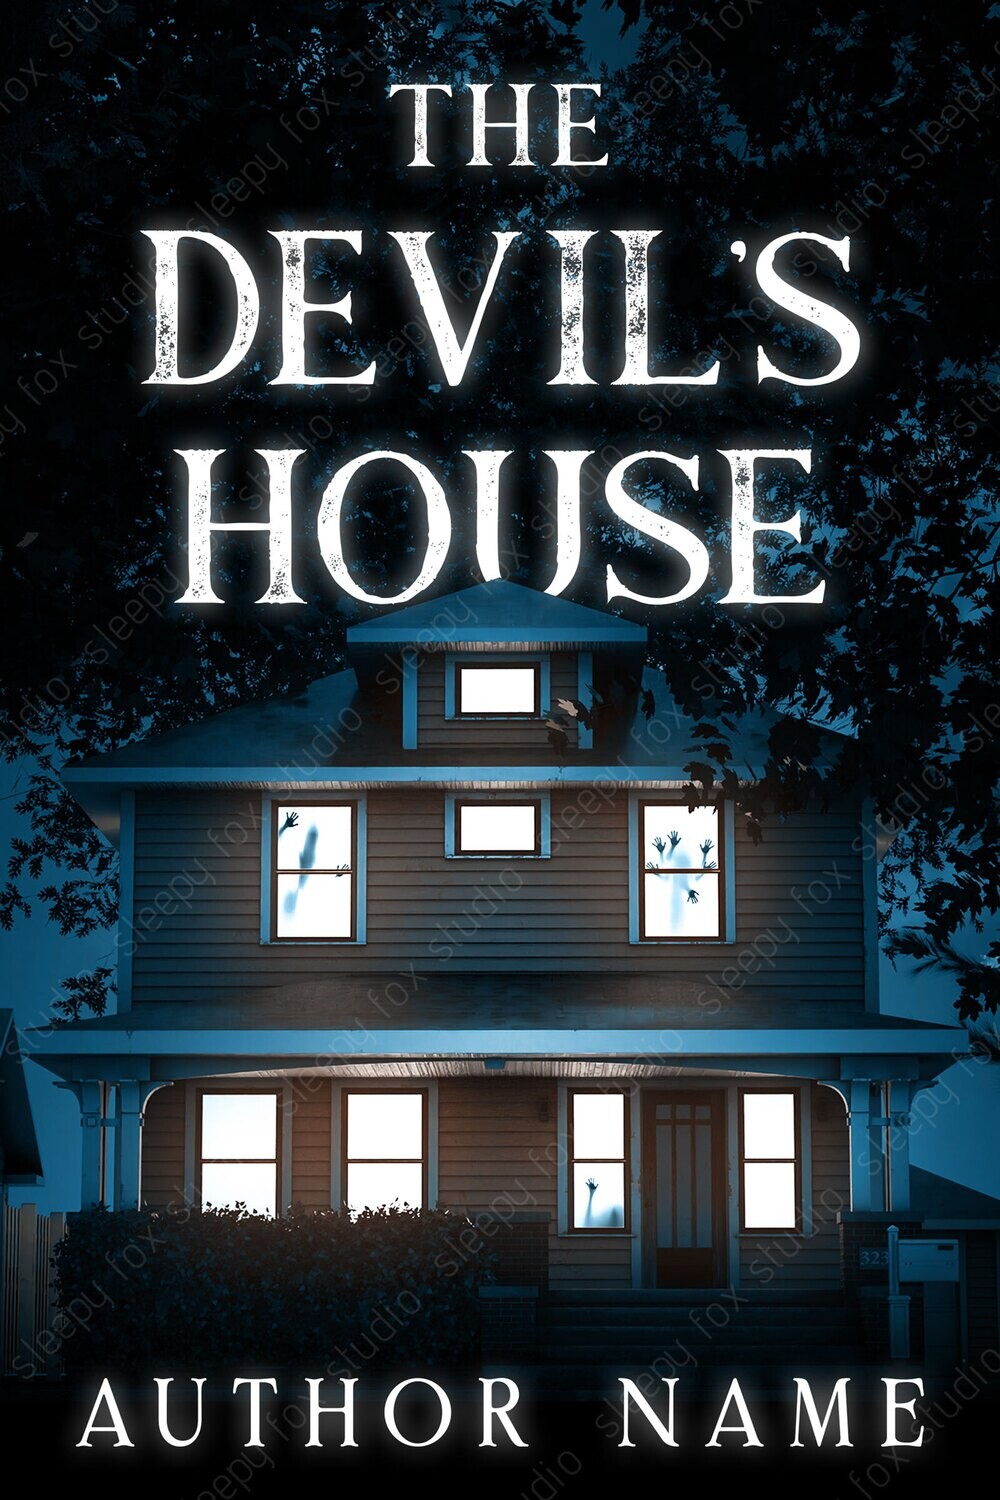 The Devil's House